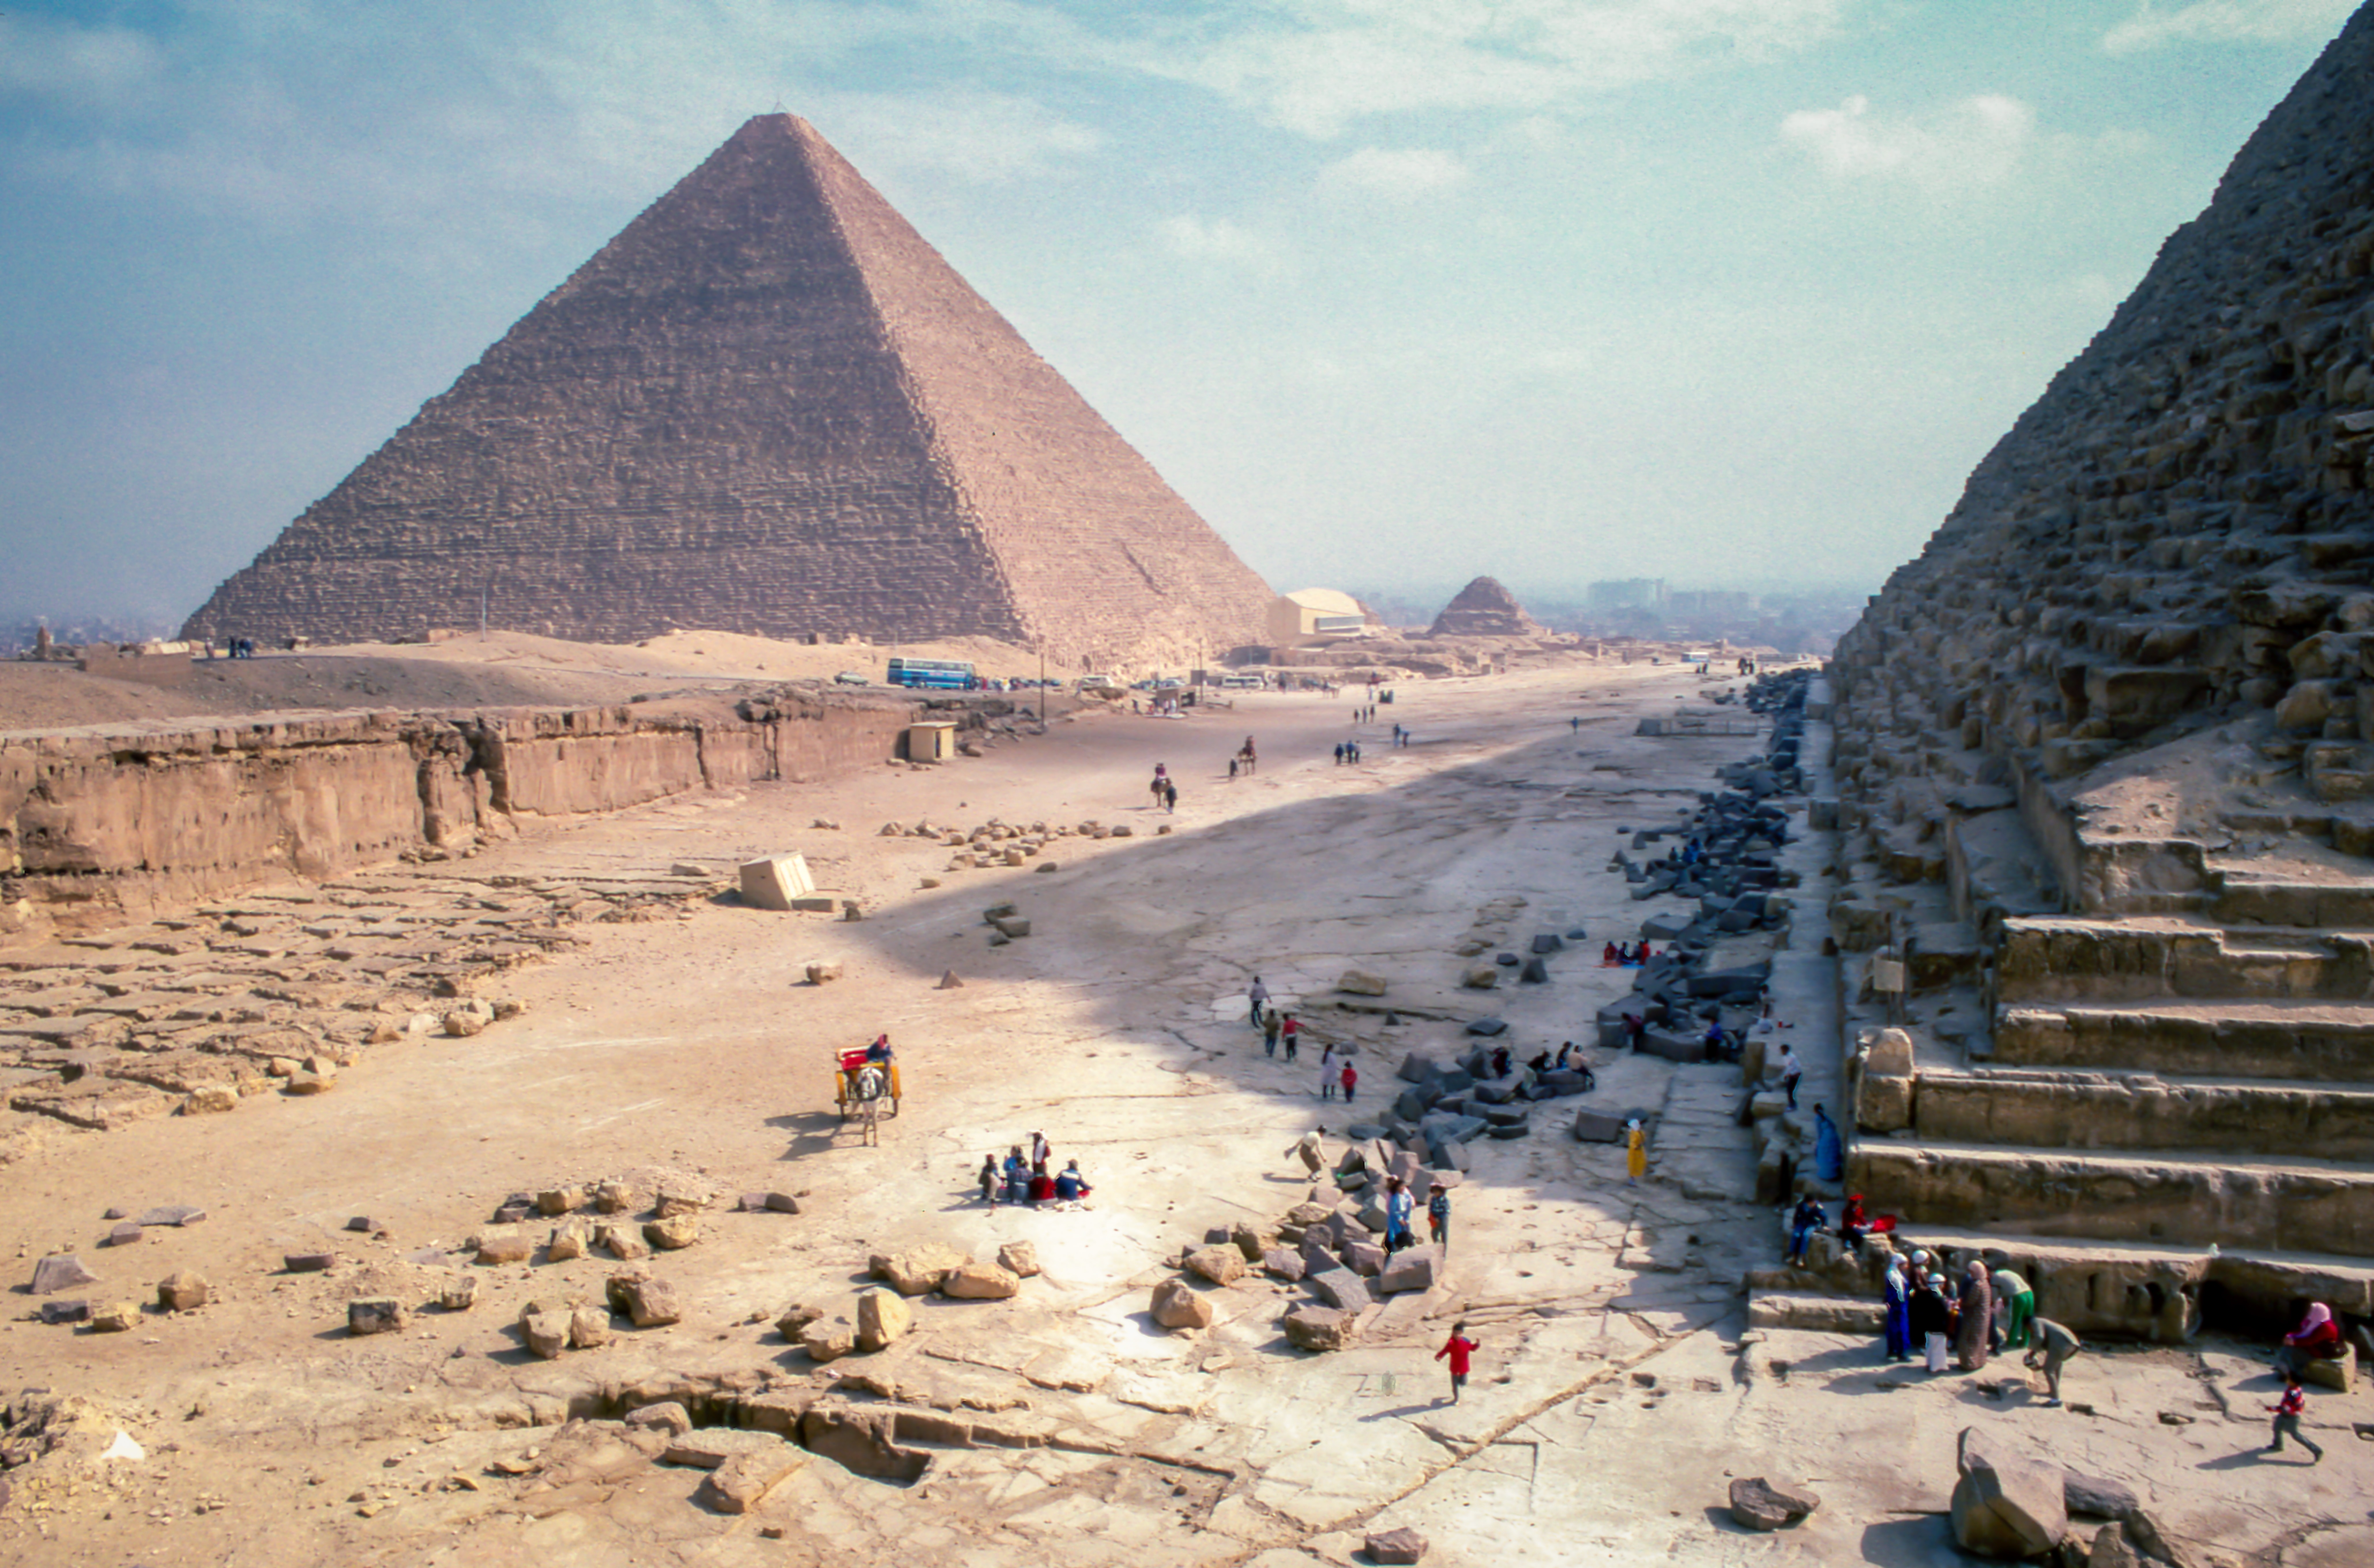 На снимке изображена одна из пирамид в Гизе с рабочими на заднем плане.